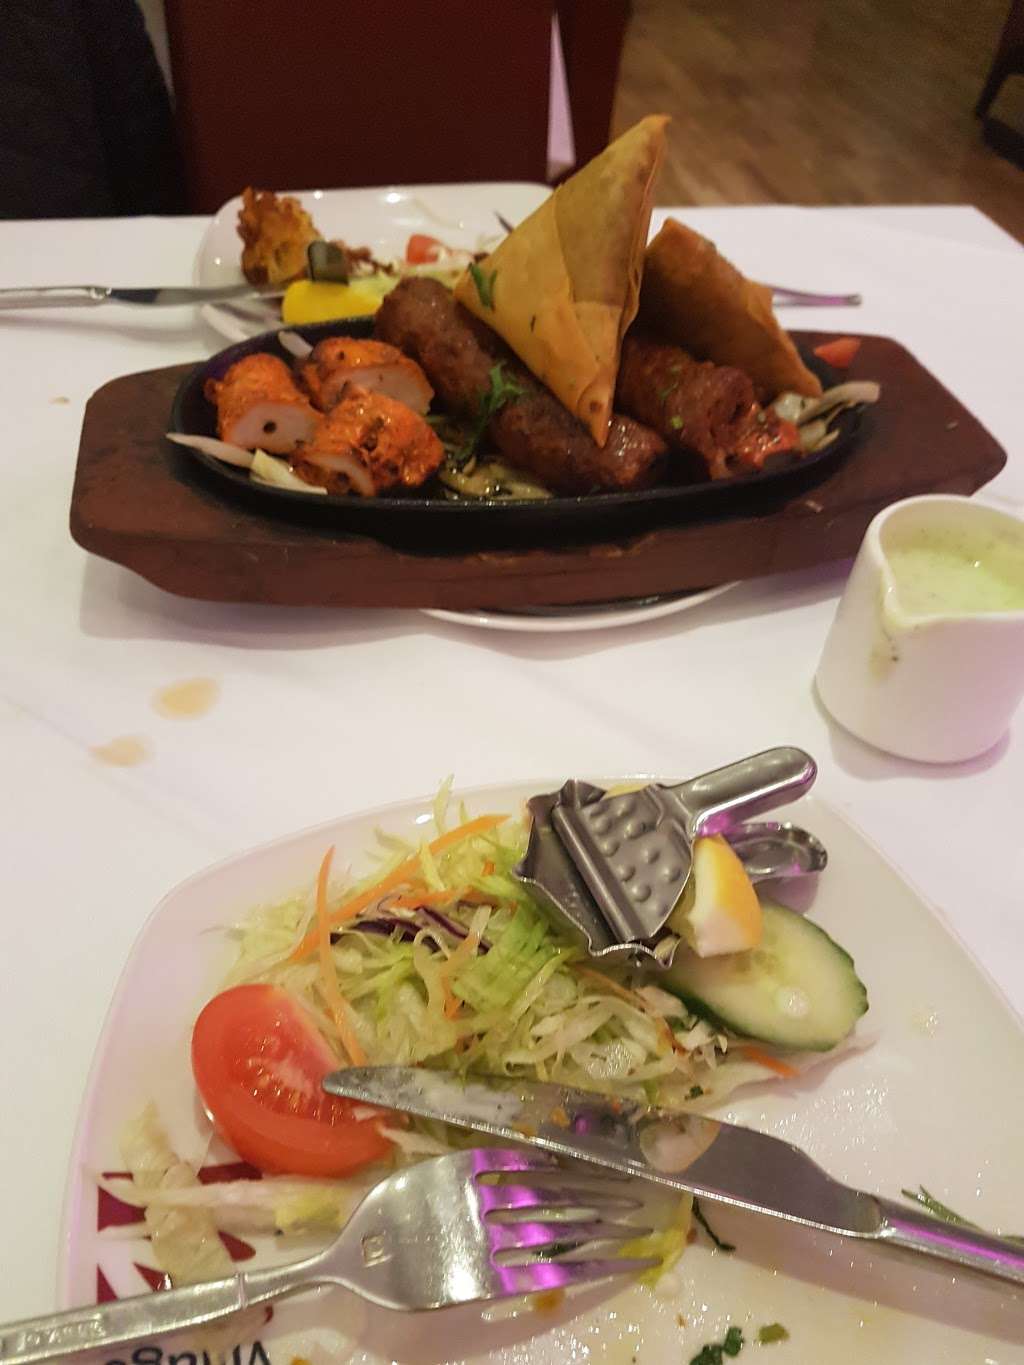 Village Tandoori Restaurant | 11 Chaseville Parade, London N21 1PG, UK | Phone: 020 8360 6980